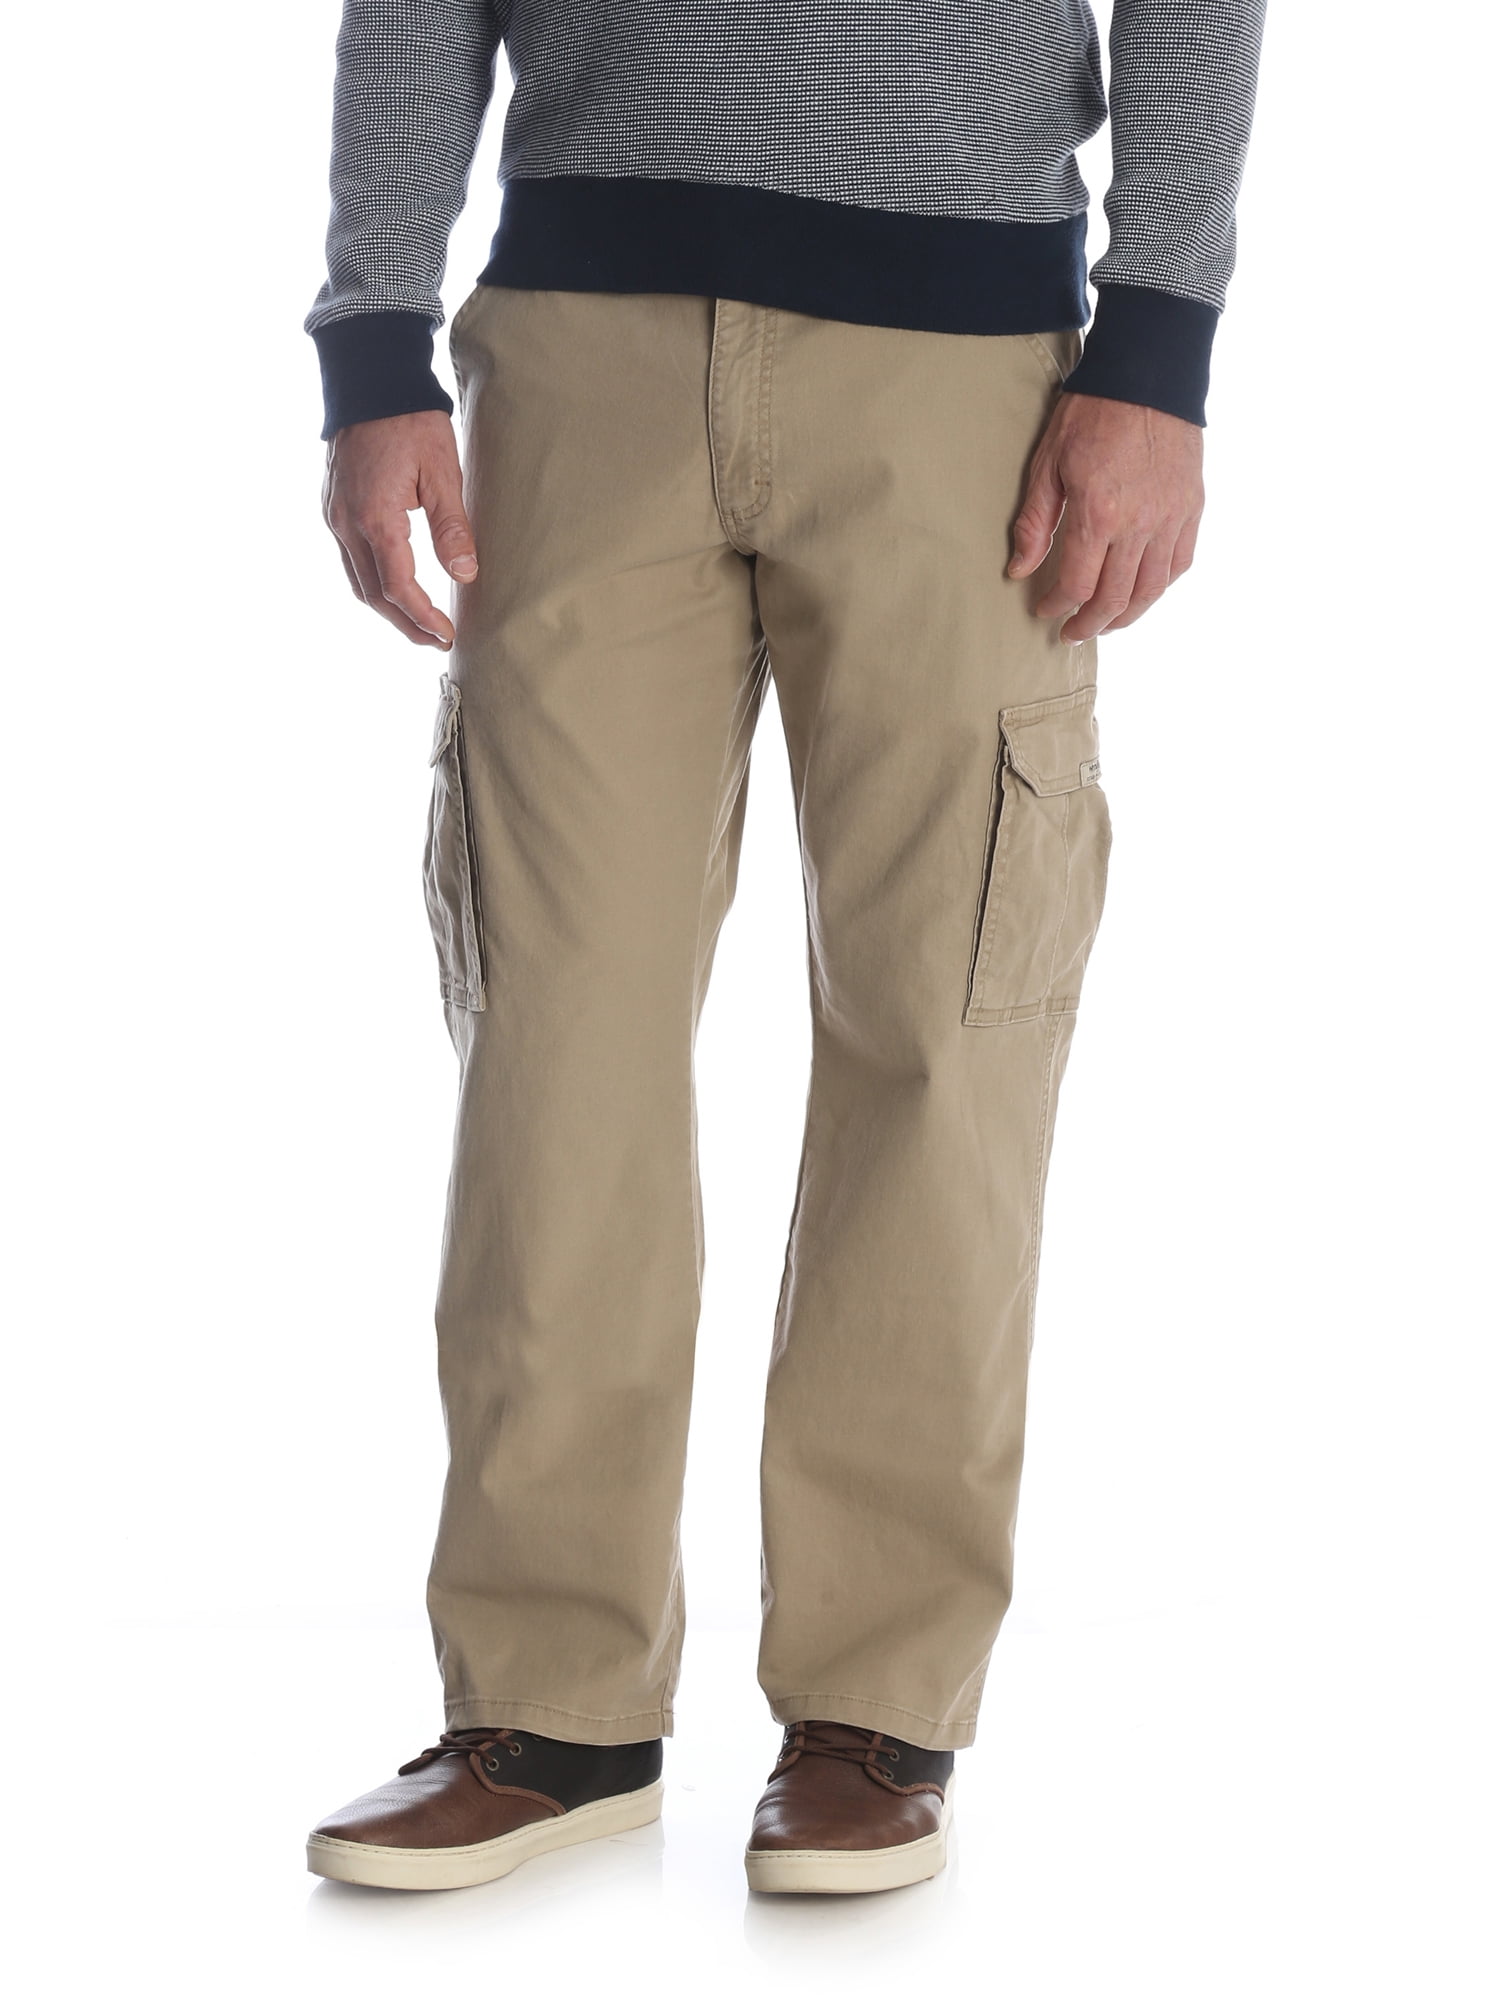 Wrangler Men's Relaxed Fit Flex Cargo Pants - Gray 40x30 : Target